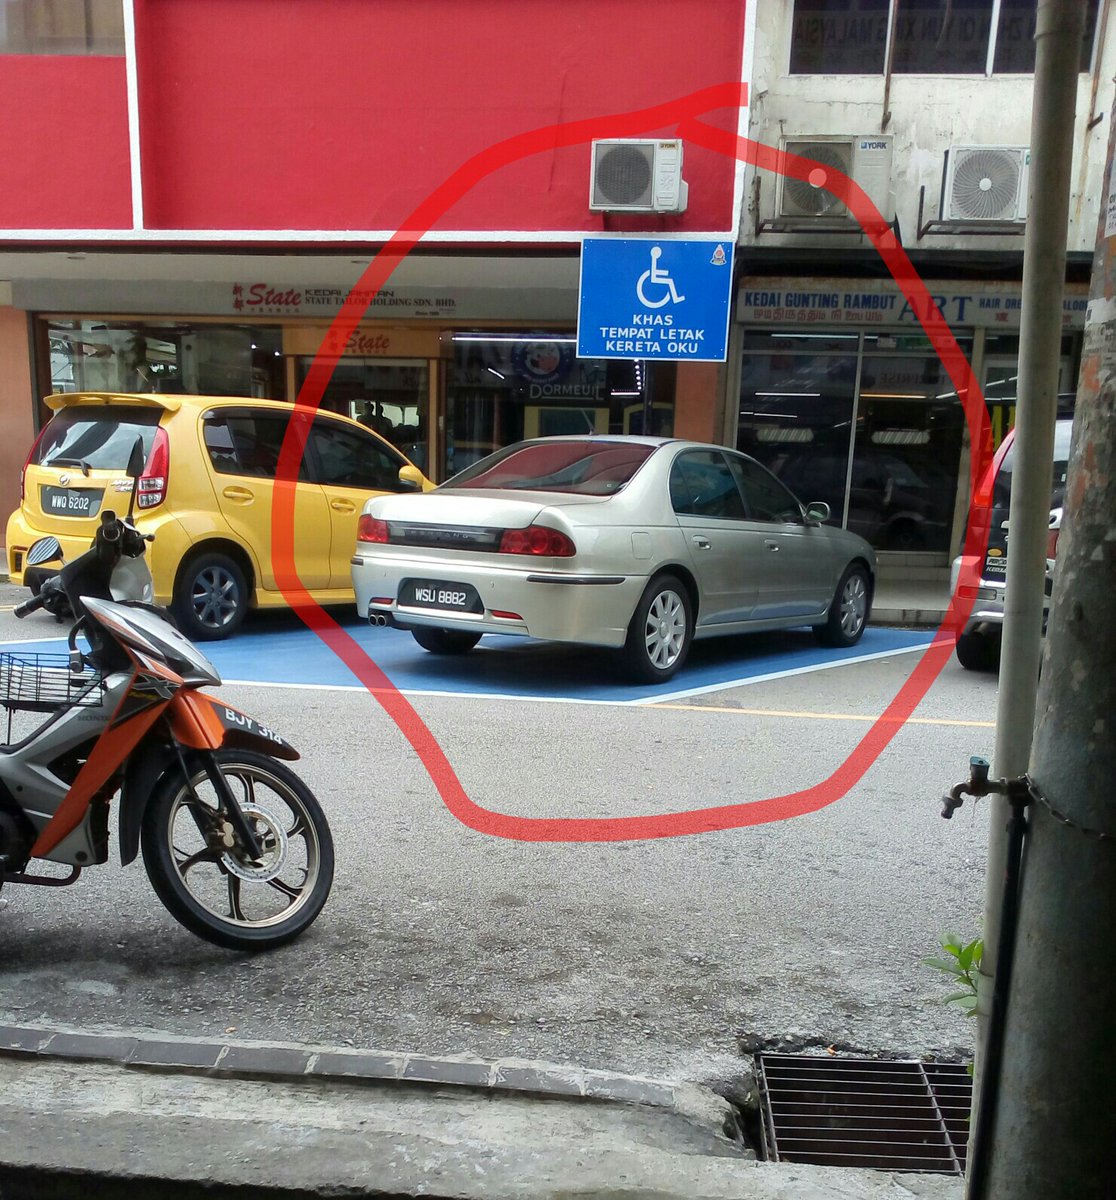 A d'able-bodied BODOH selfish bastard Malaysian parked car WSU 8882@Selangor Petaling Jaya Jln 52/10,OKU/disabled parking bay,21 January 2020,11am-makes malaysia BODOHland #newyearparty #newyears2018 #newyears2020 #GongXiFaCai  #newyearscelebration #newyearsparty